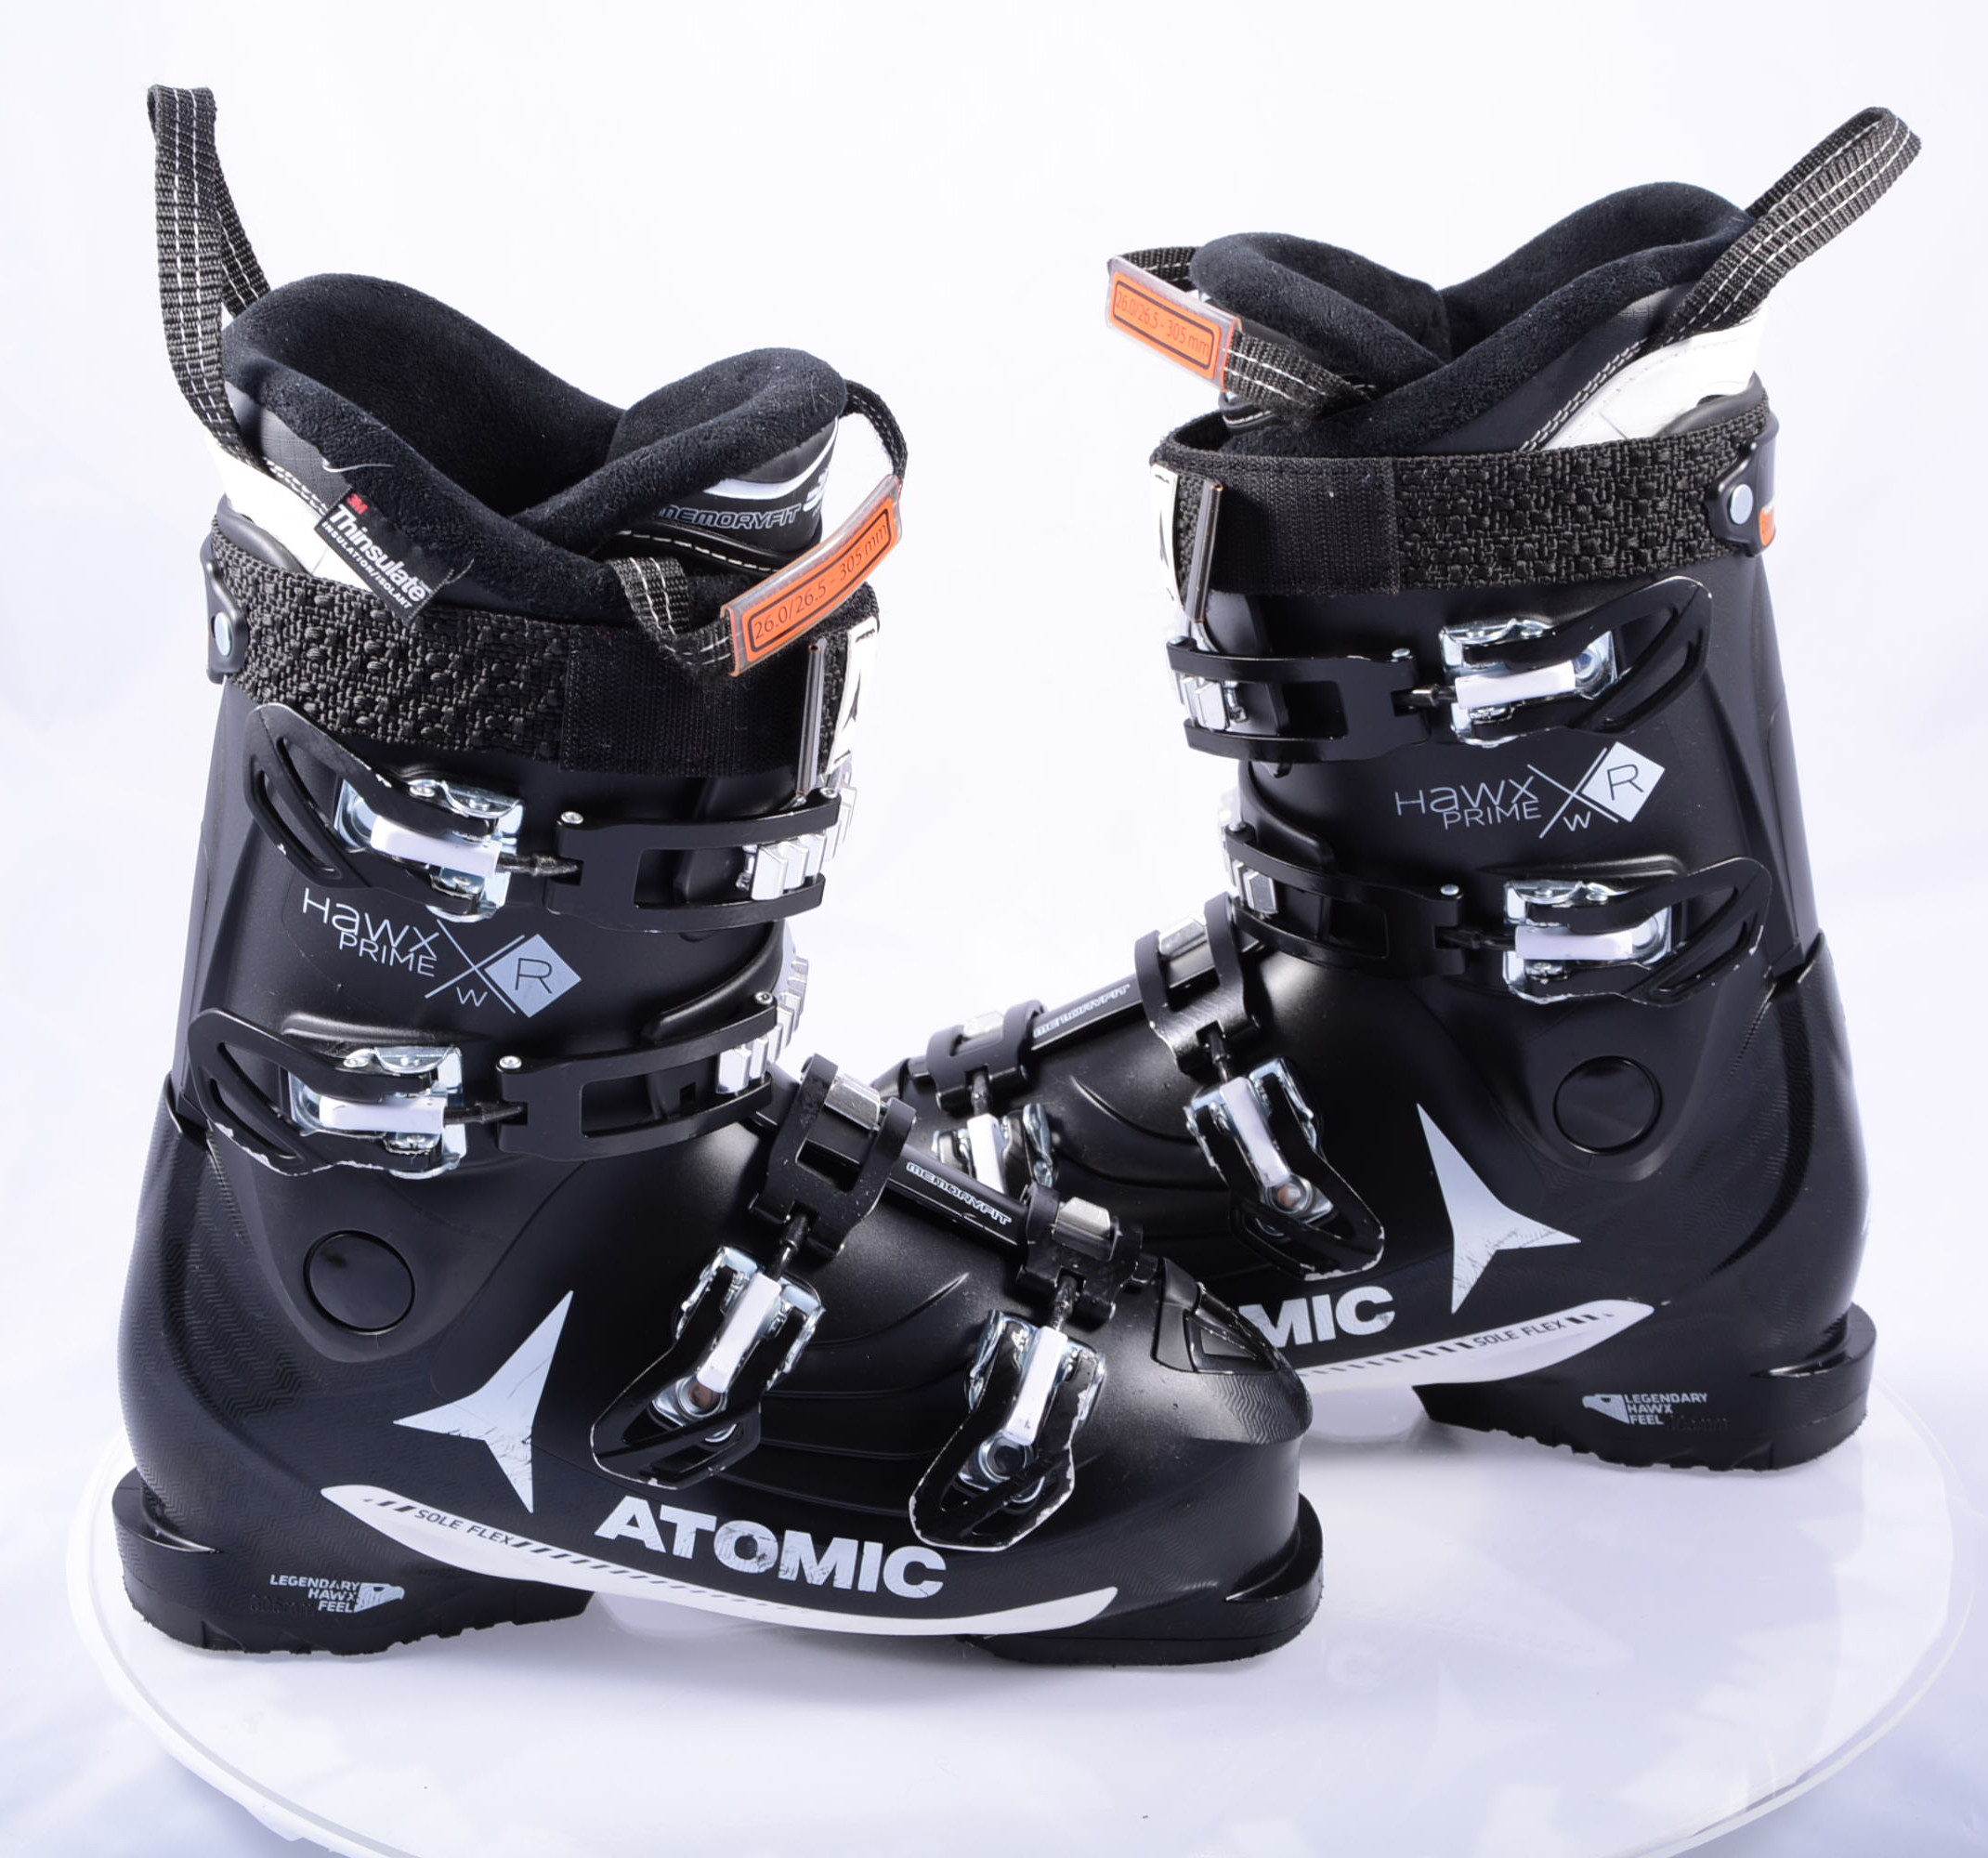 women's ski boots ATOMIC HAWX PRIME R 90 W, MEMORY fit, SOLE flex